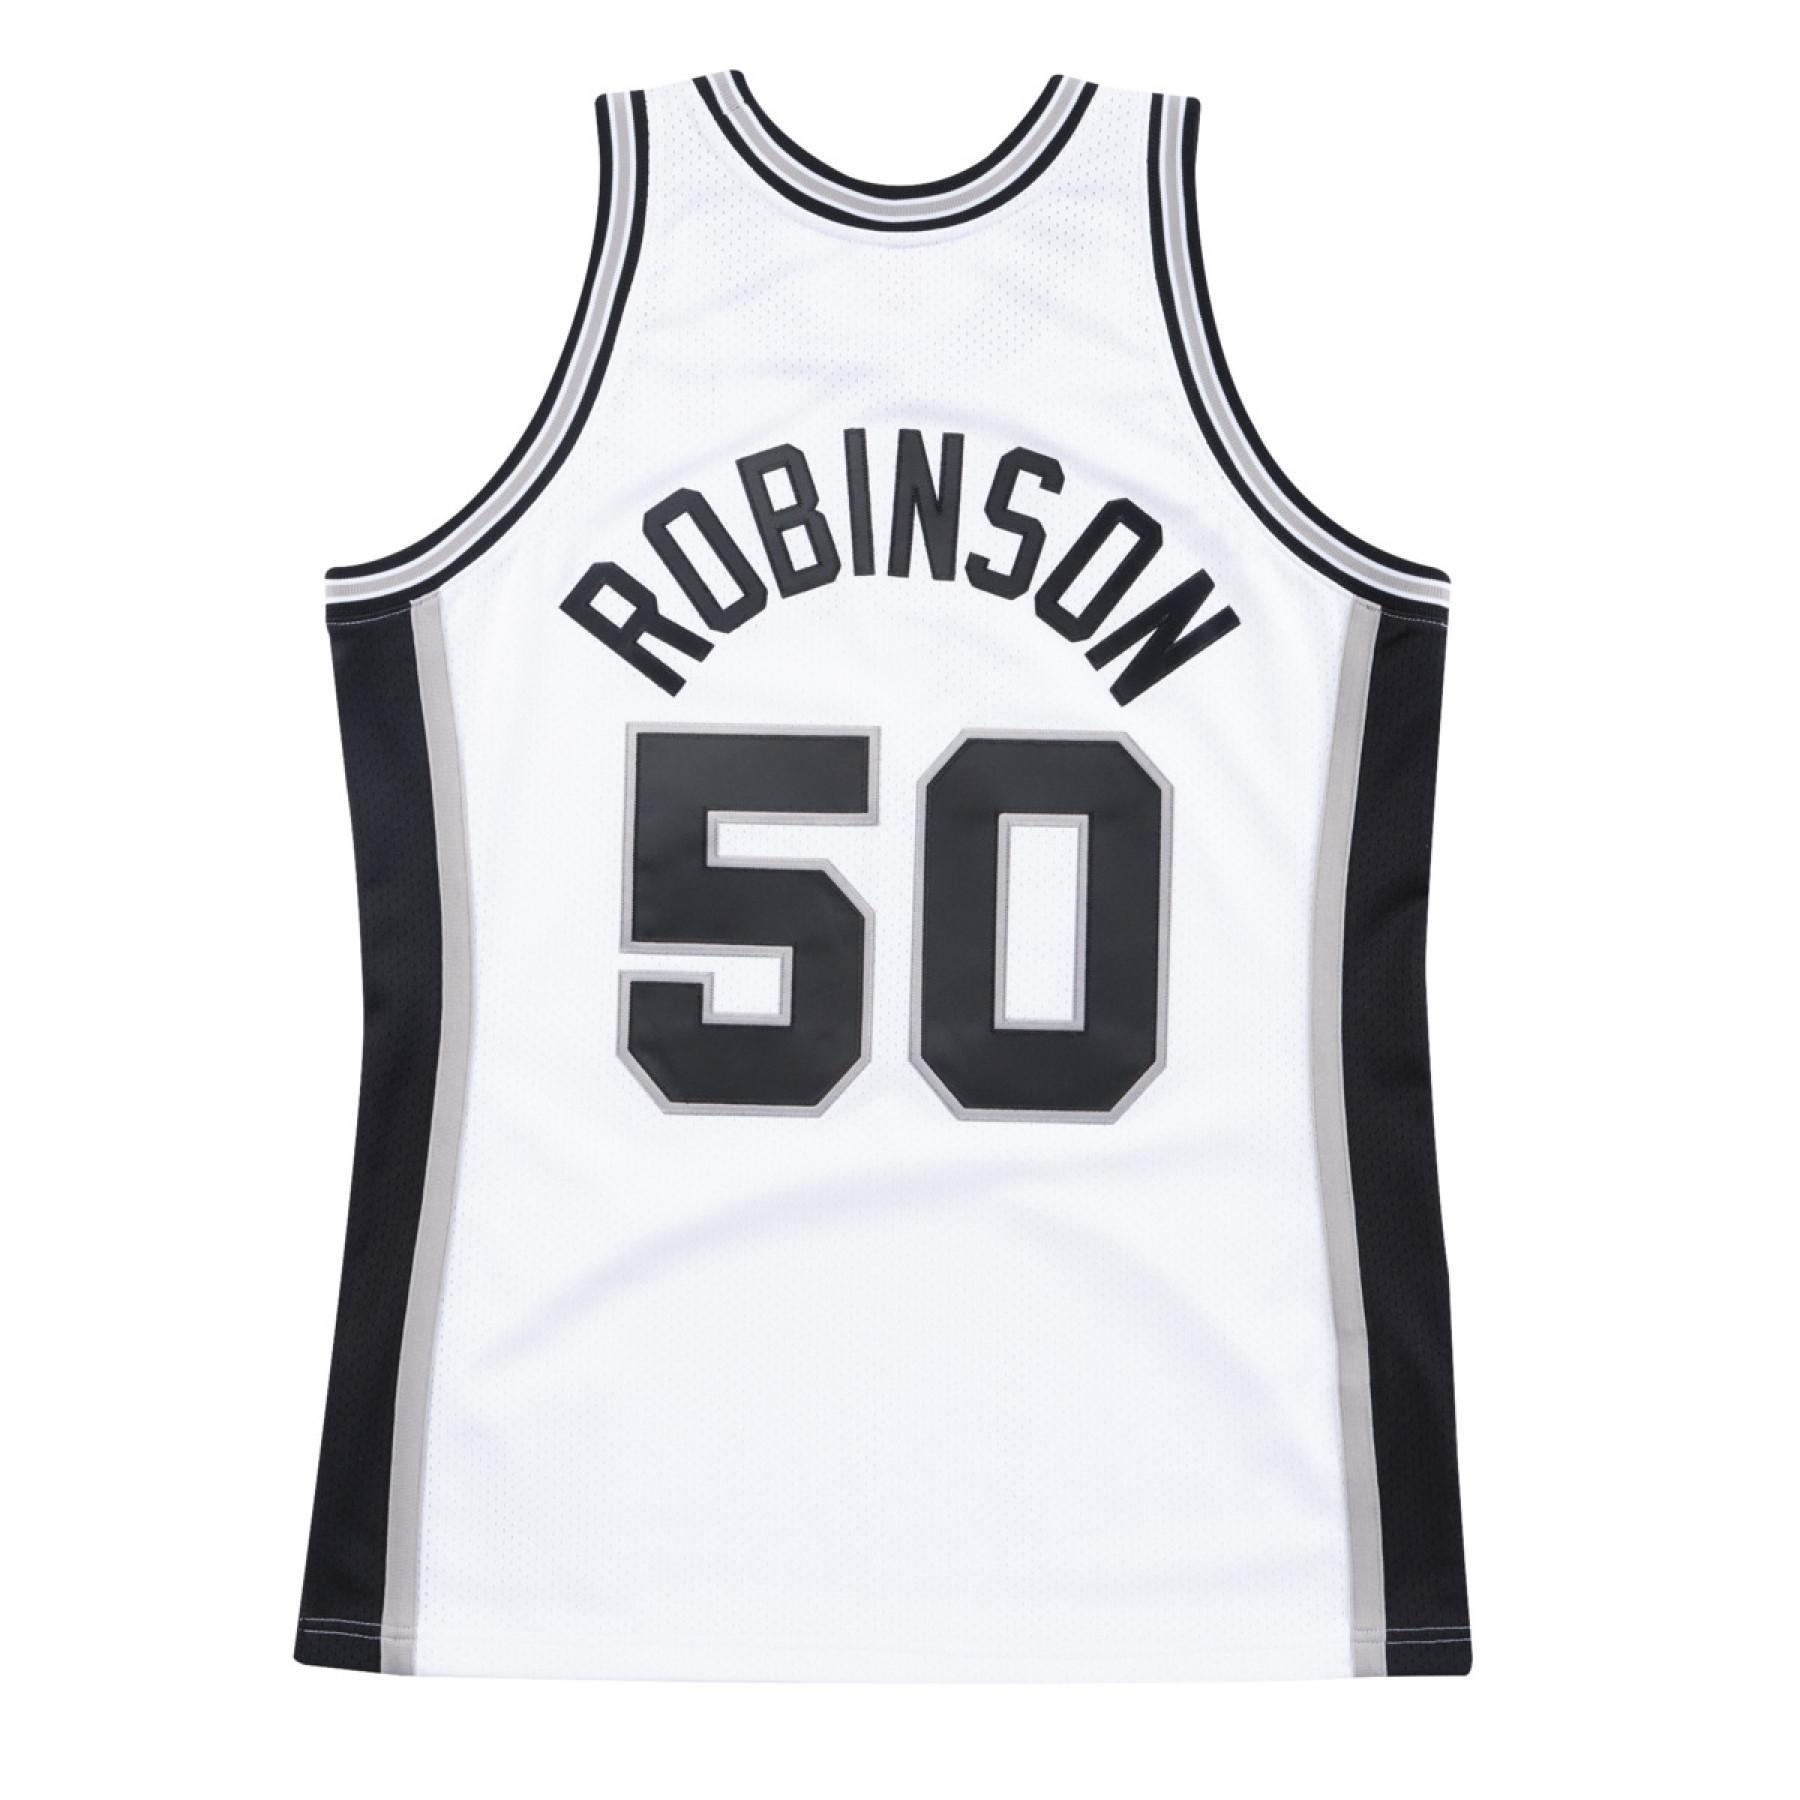 Home jersey San Antonio Spurs finals David Robinson 1998/99